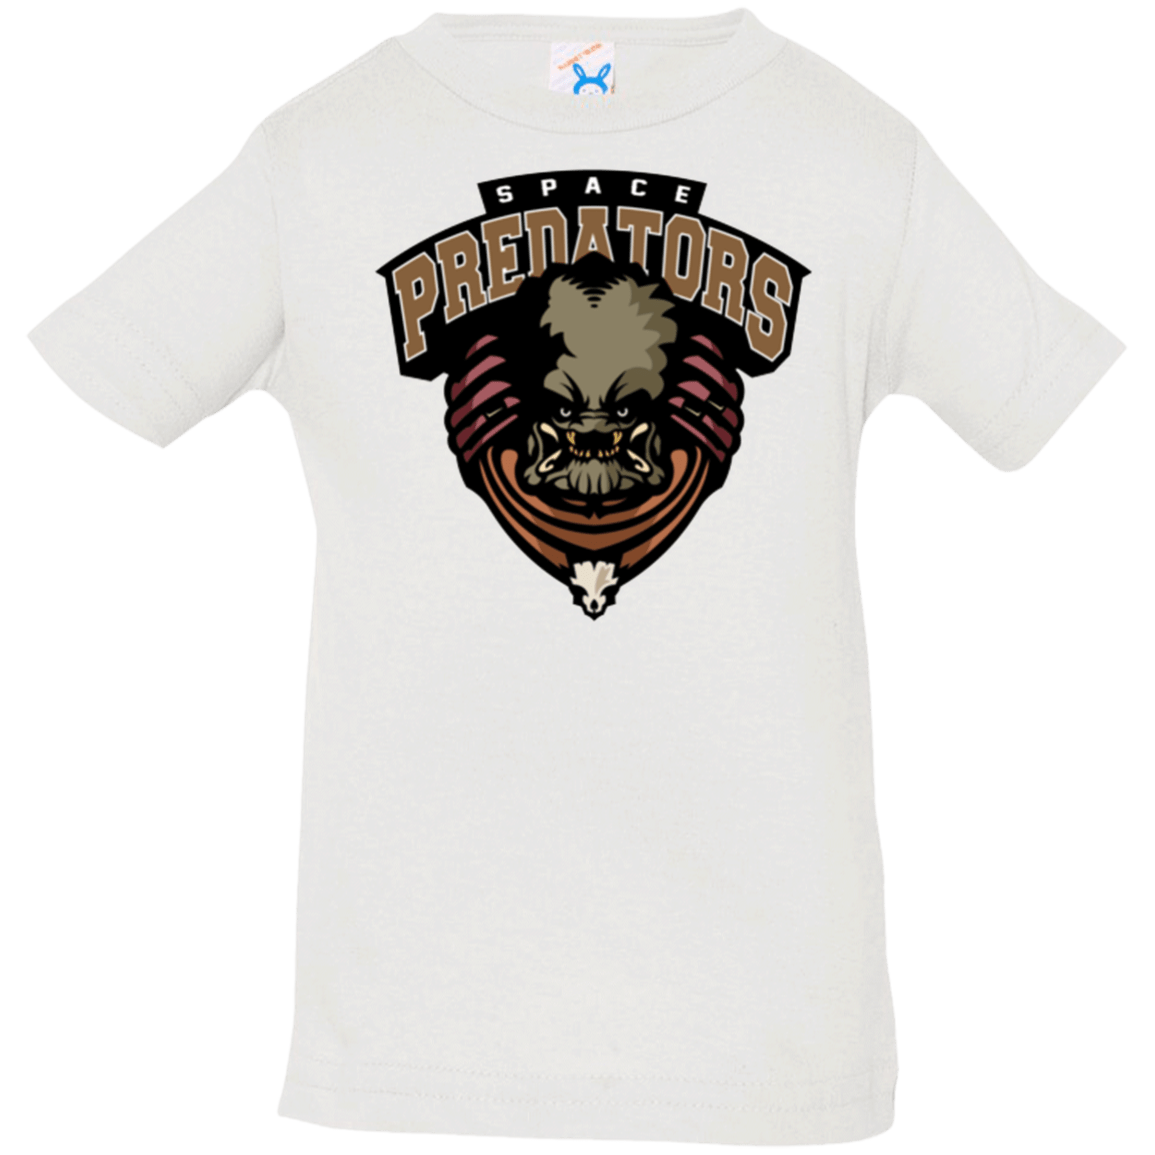 Space Predators Infant Premium T-Shirt